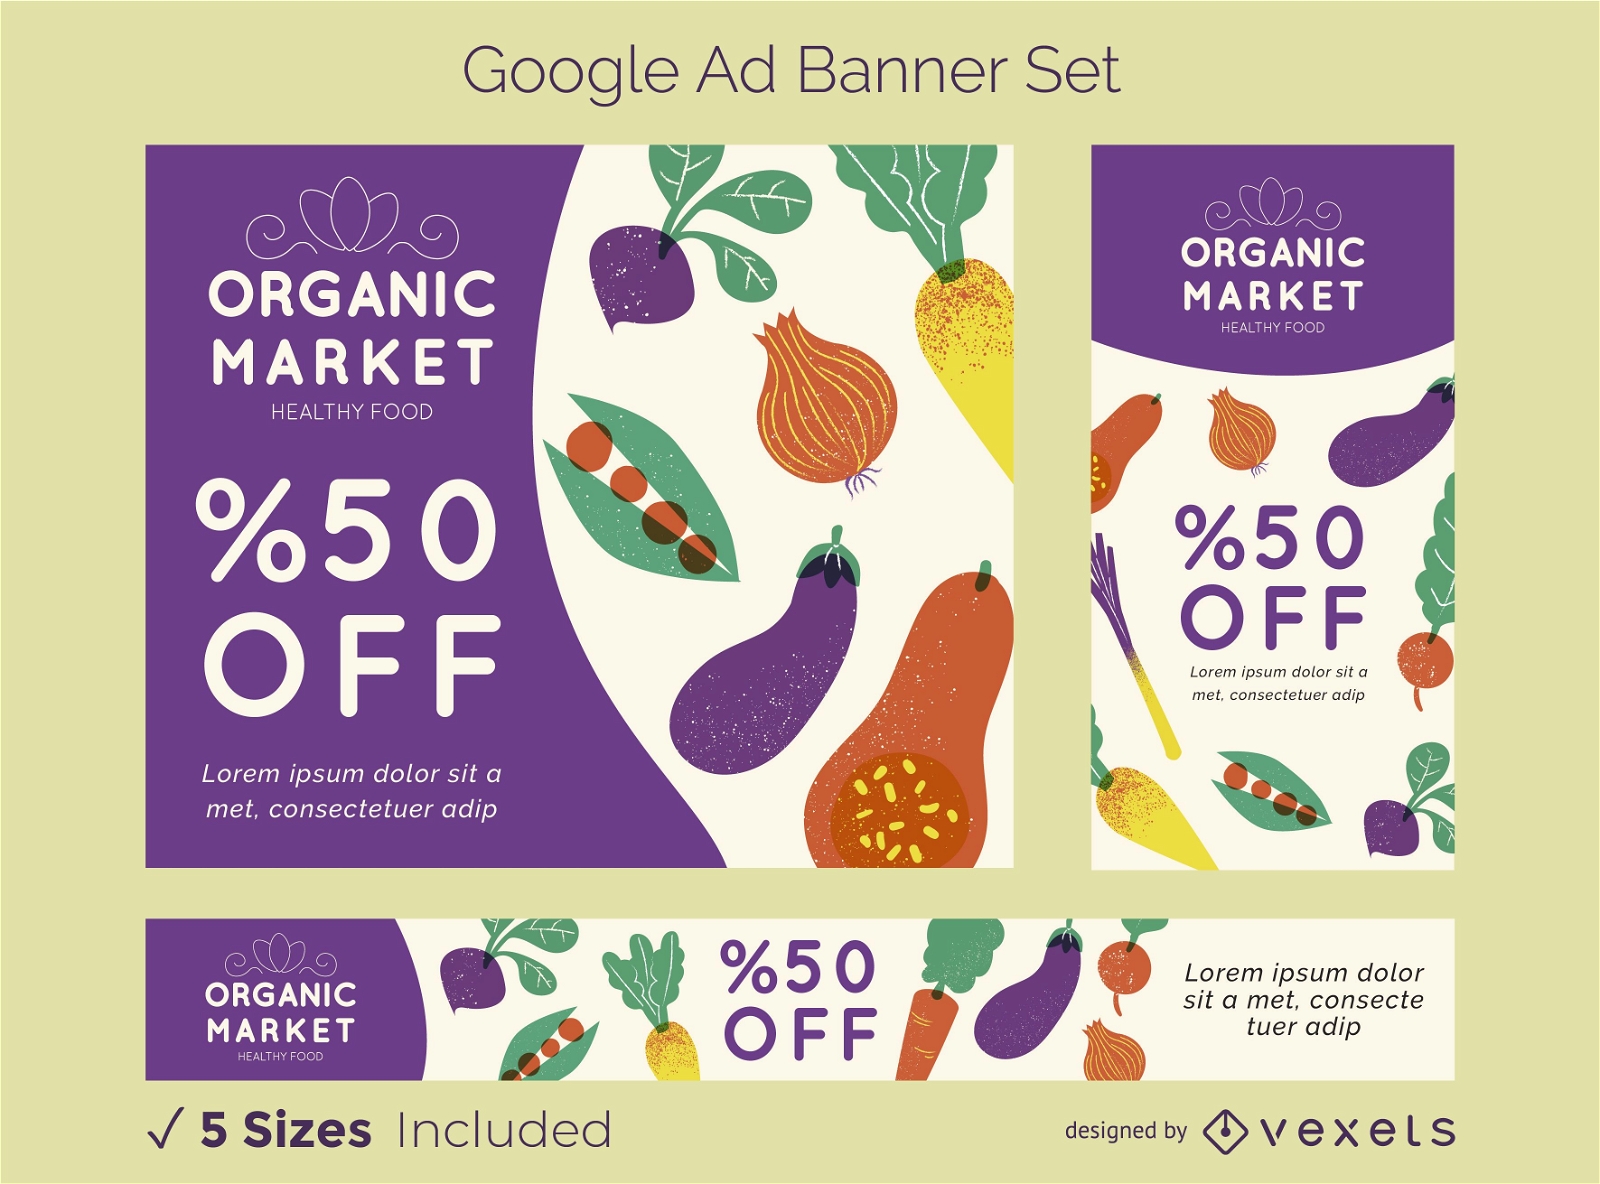 Organic market ad banner set